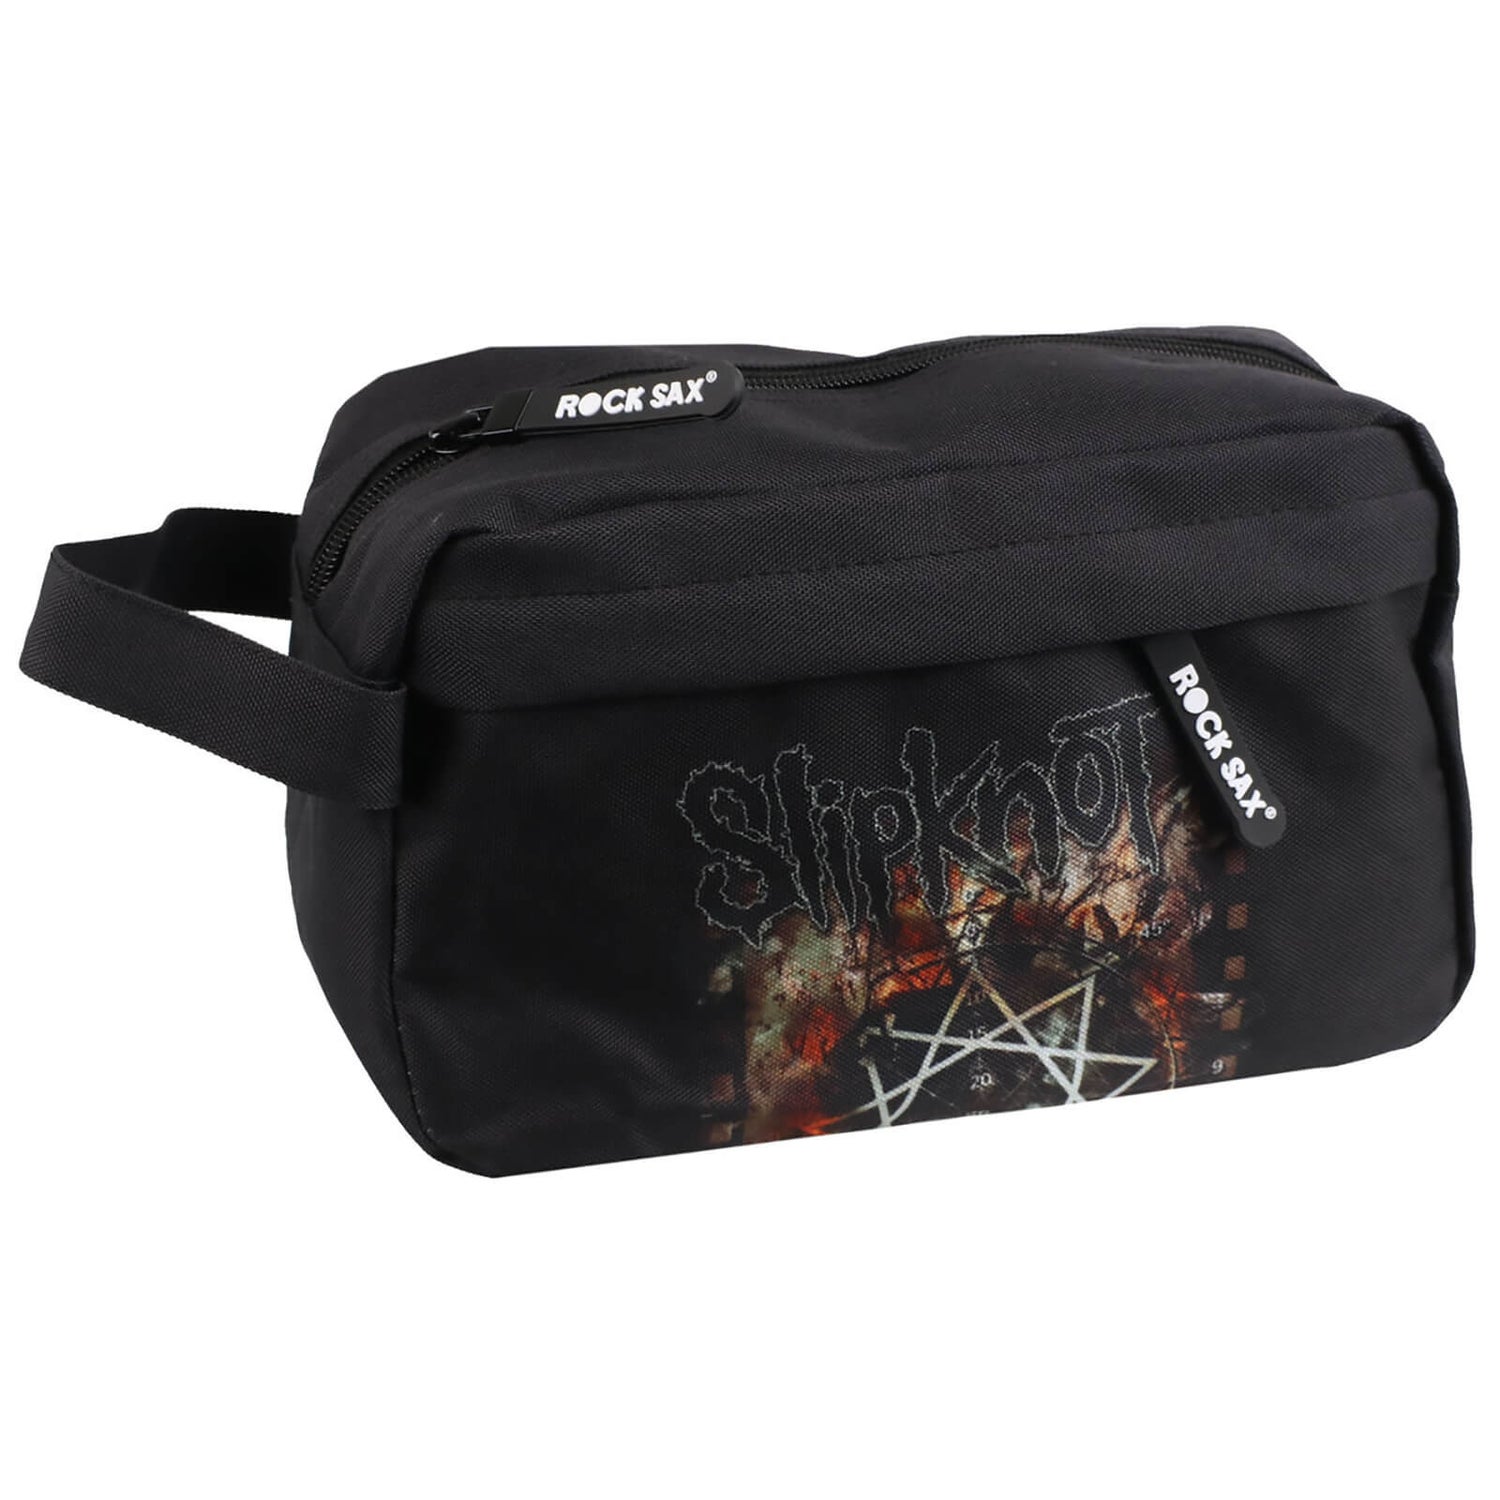 Slipknot Pentagram Toilet Bag Black : Amazon.co.uk: Fashion